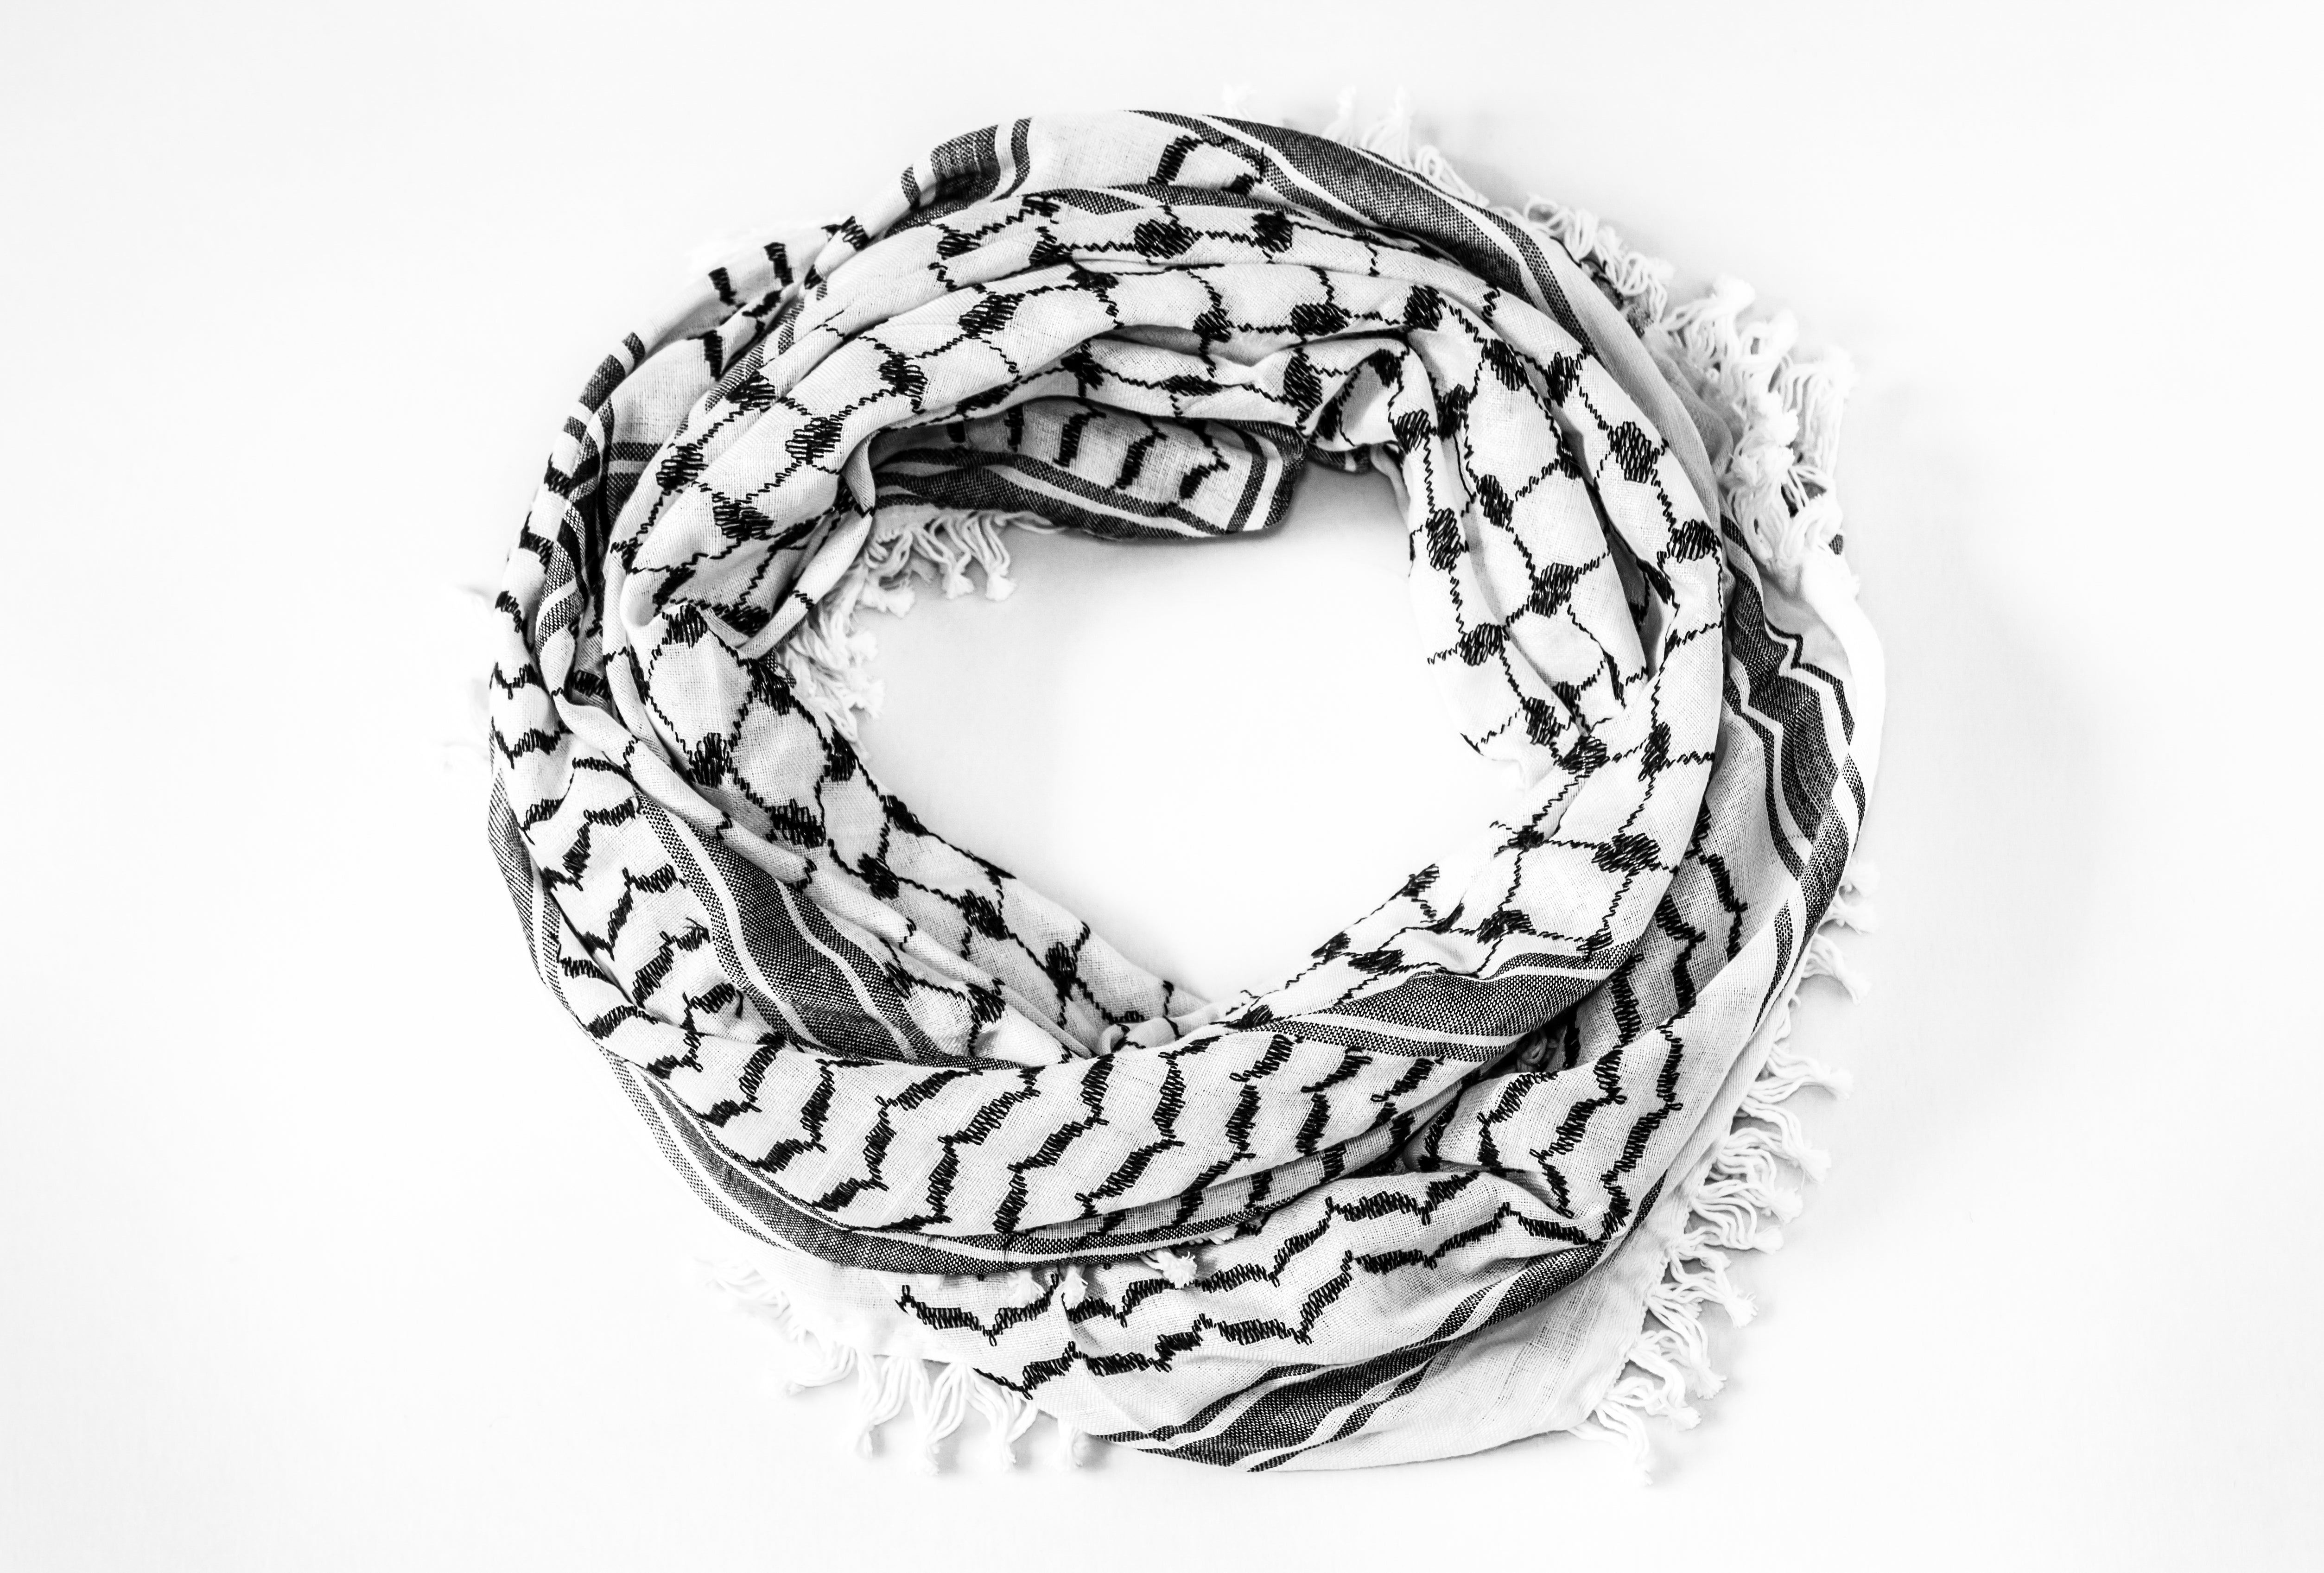 Keffiyeh white and black - Palestinian scarf